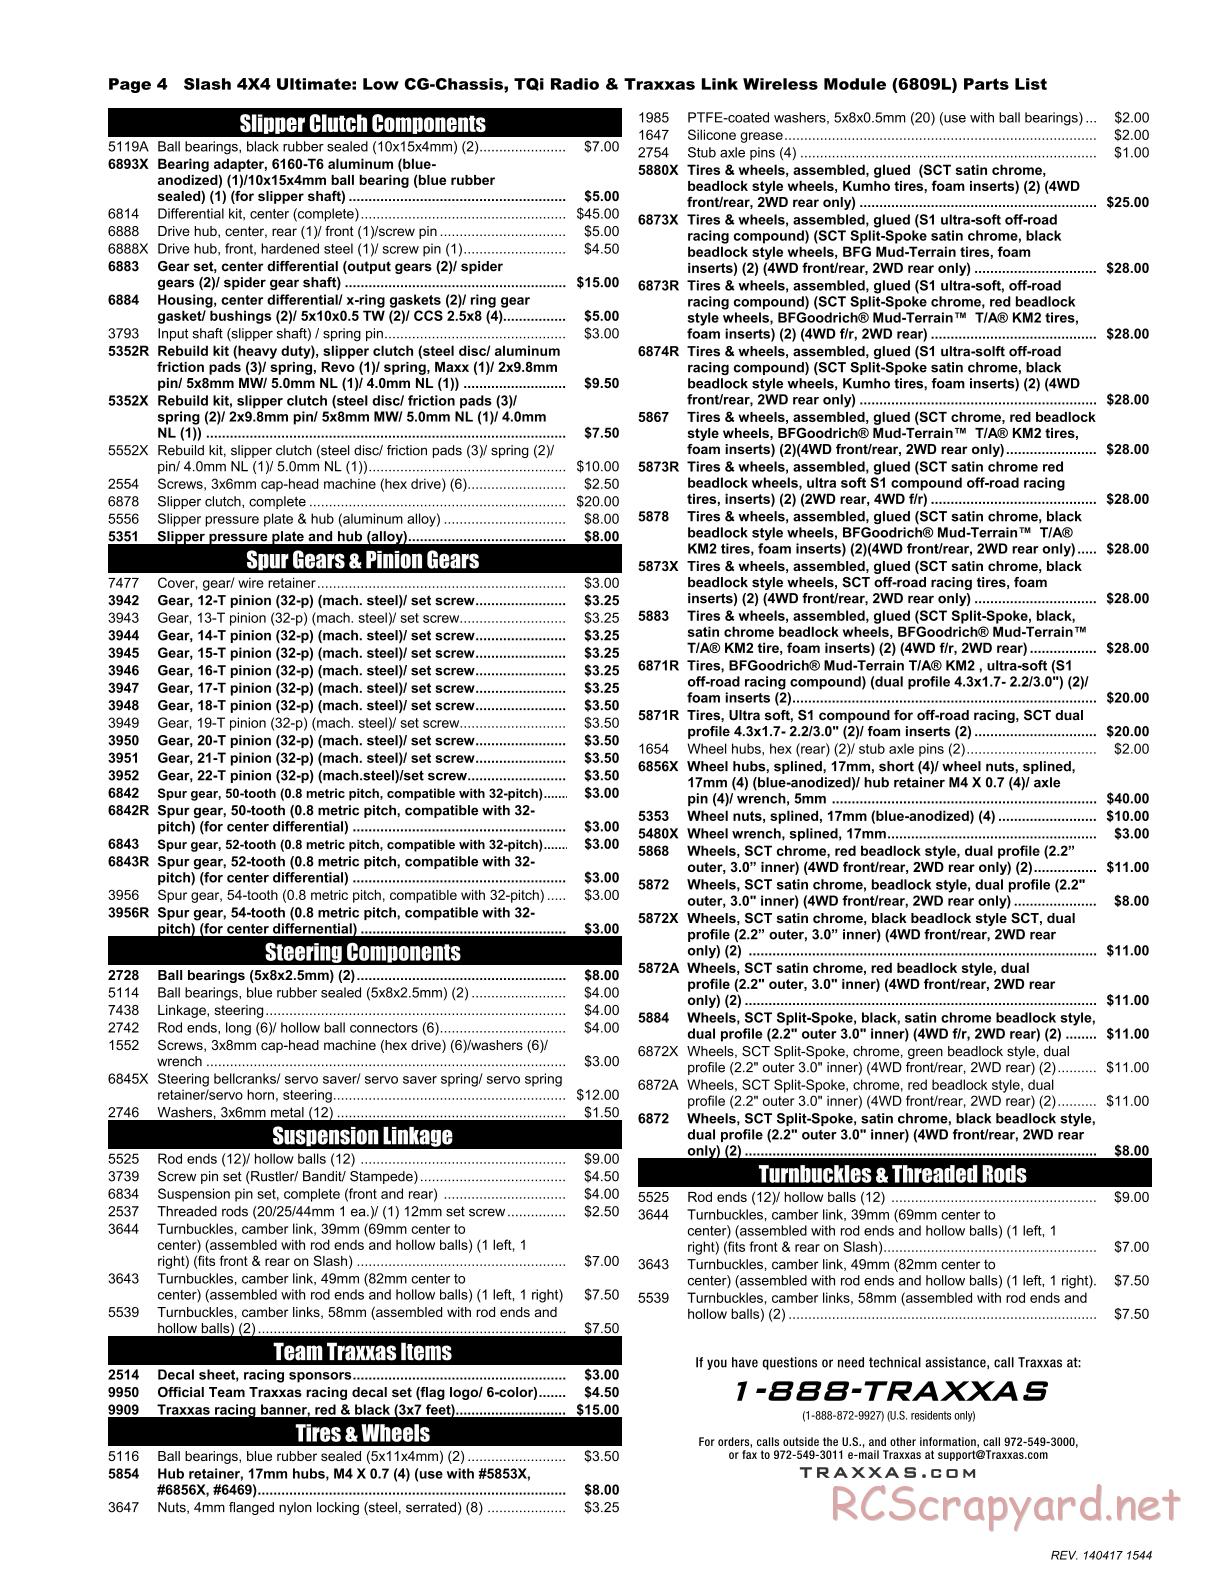 Traxxas - Slash 4x4 Ultimate LiPo (2014) - Parts List - Page 4